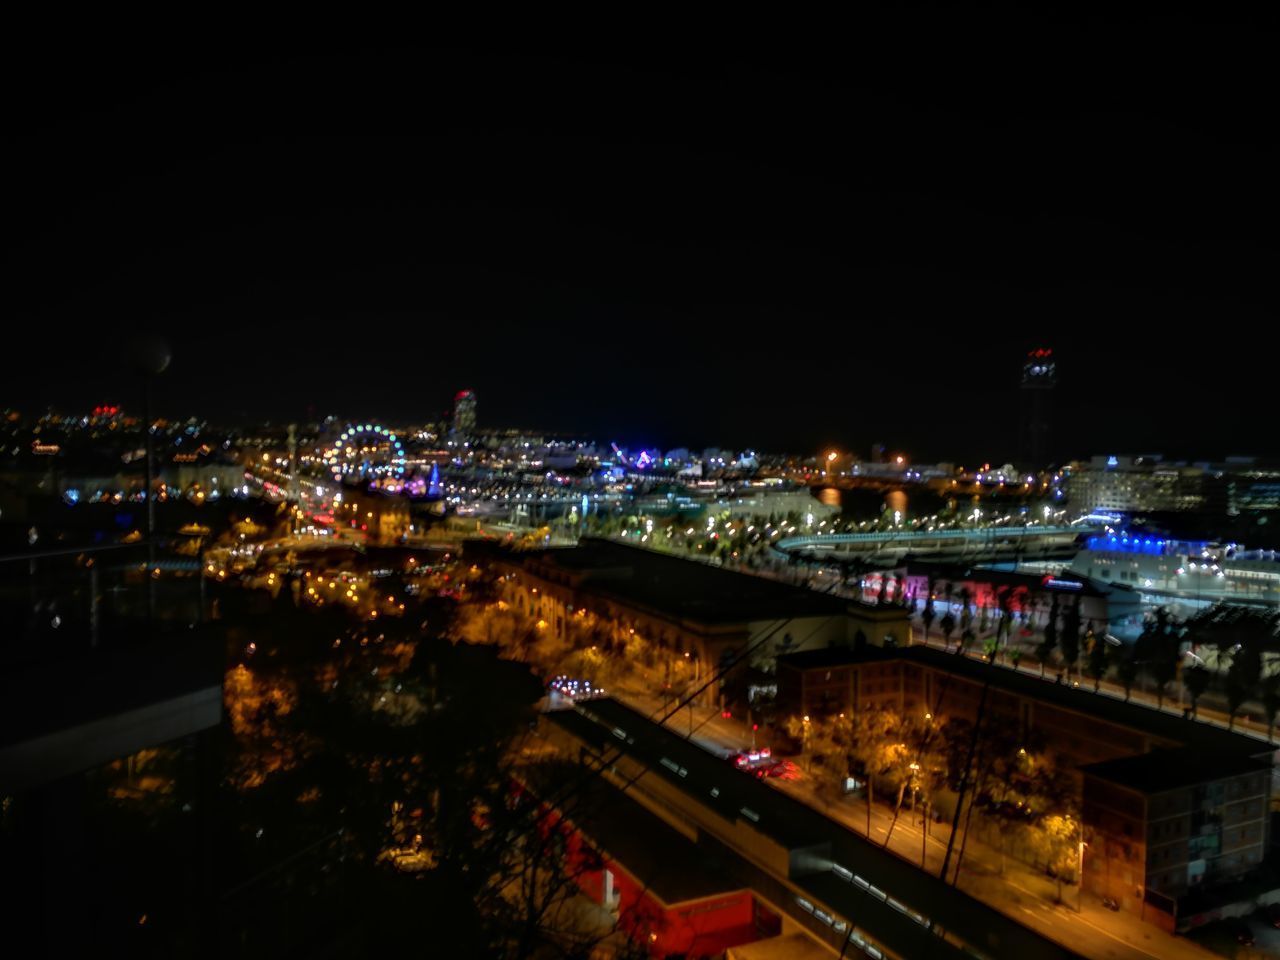 HIGH ANGLE VIEW OF ILLUMINATED CITY AT NIGHT